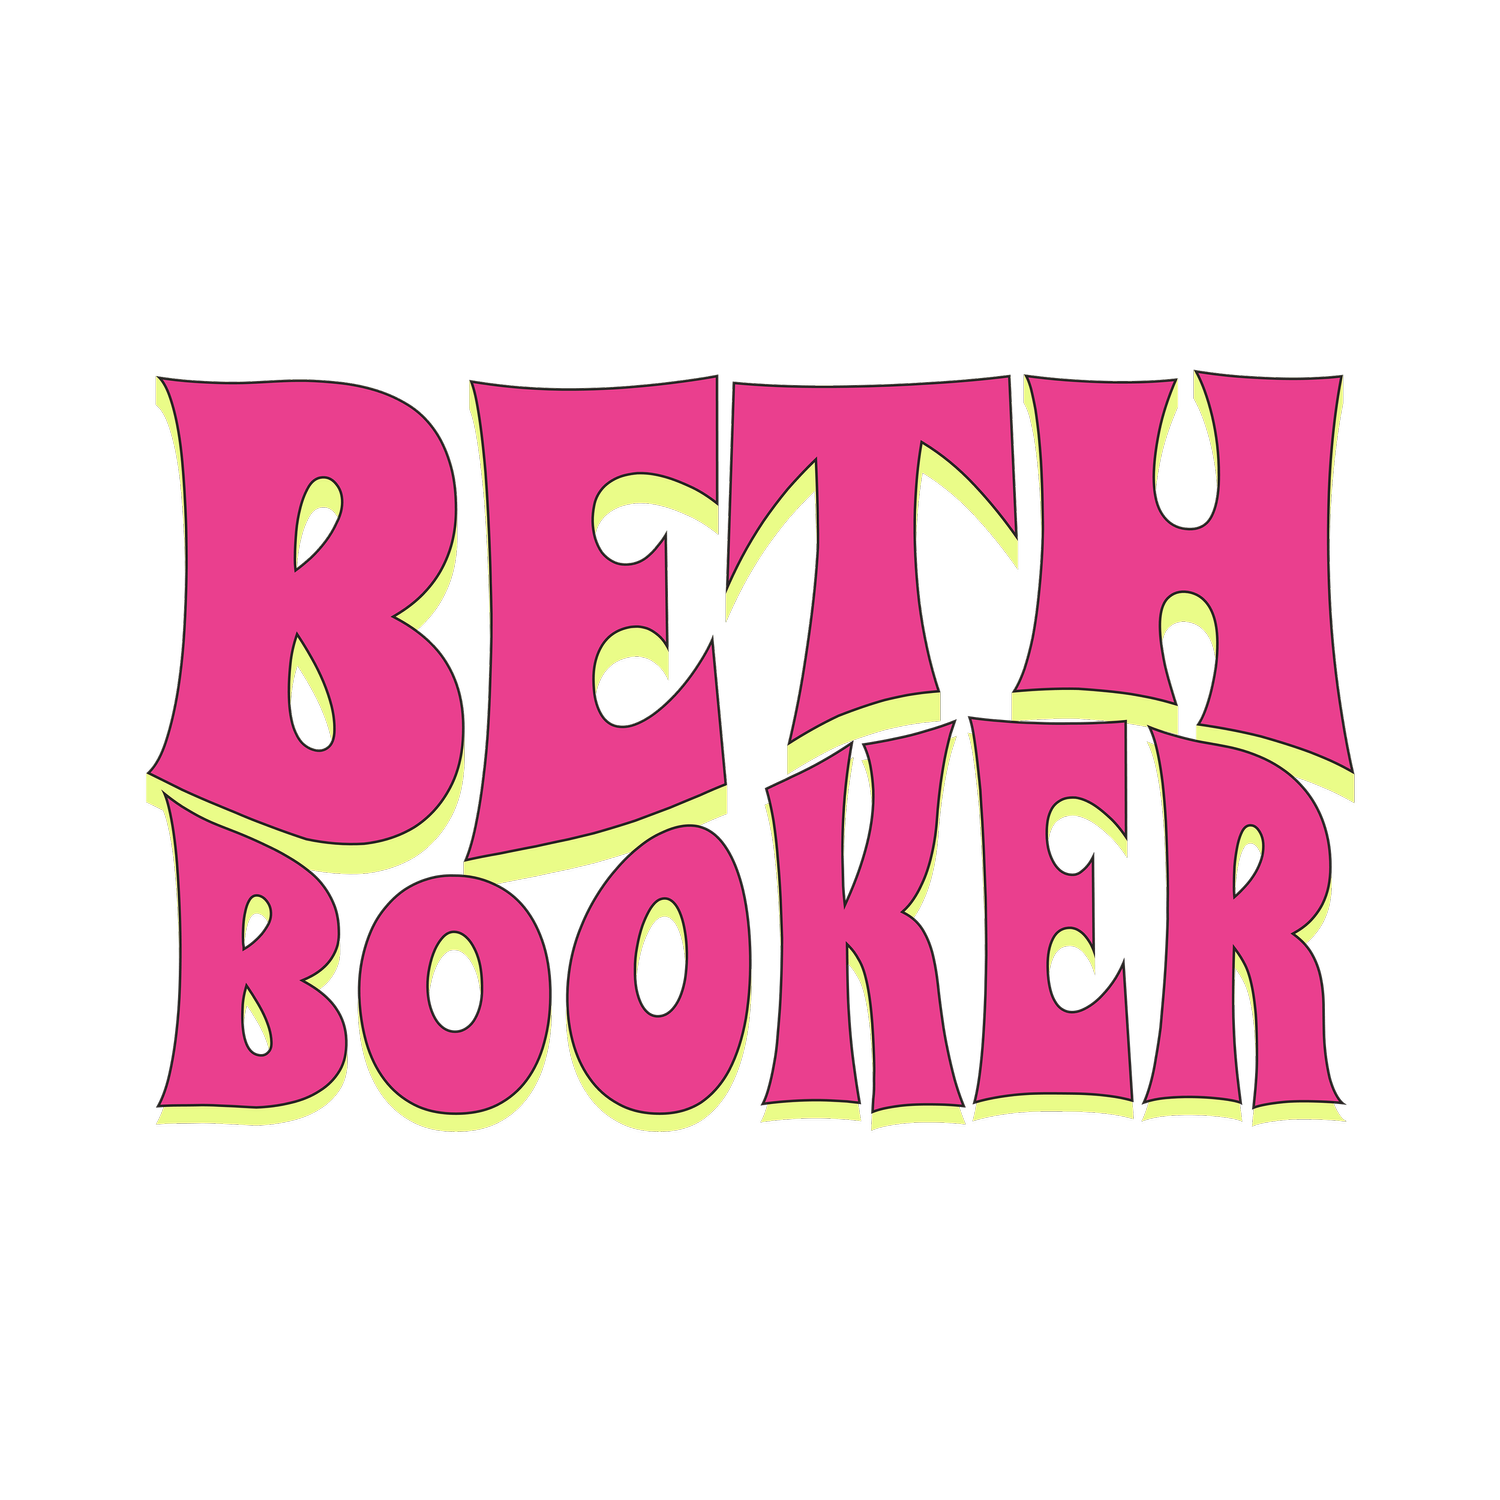 Beth Booker